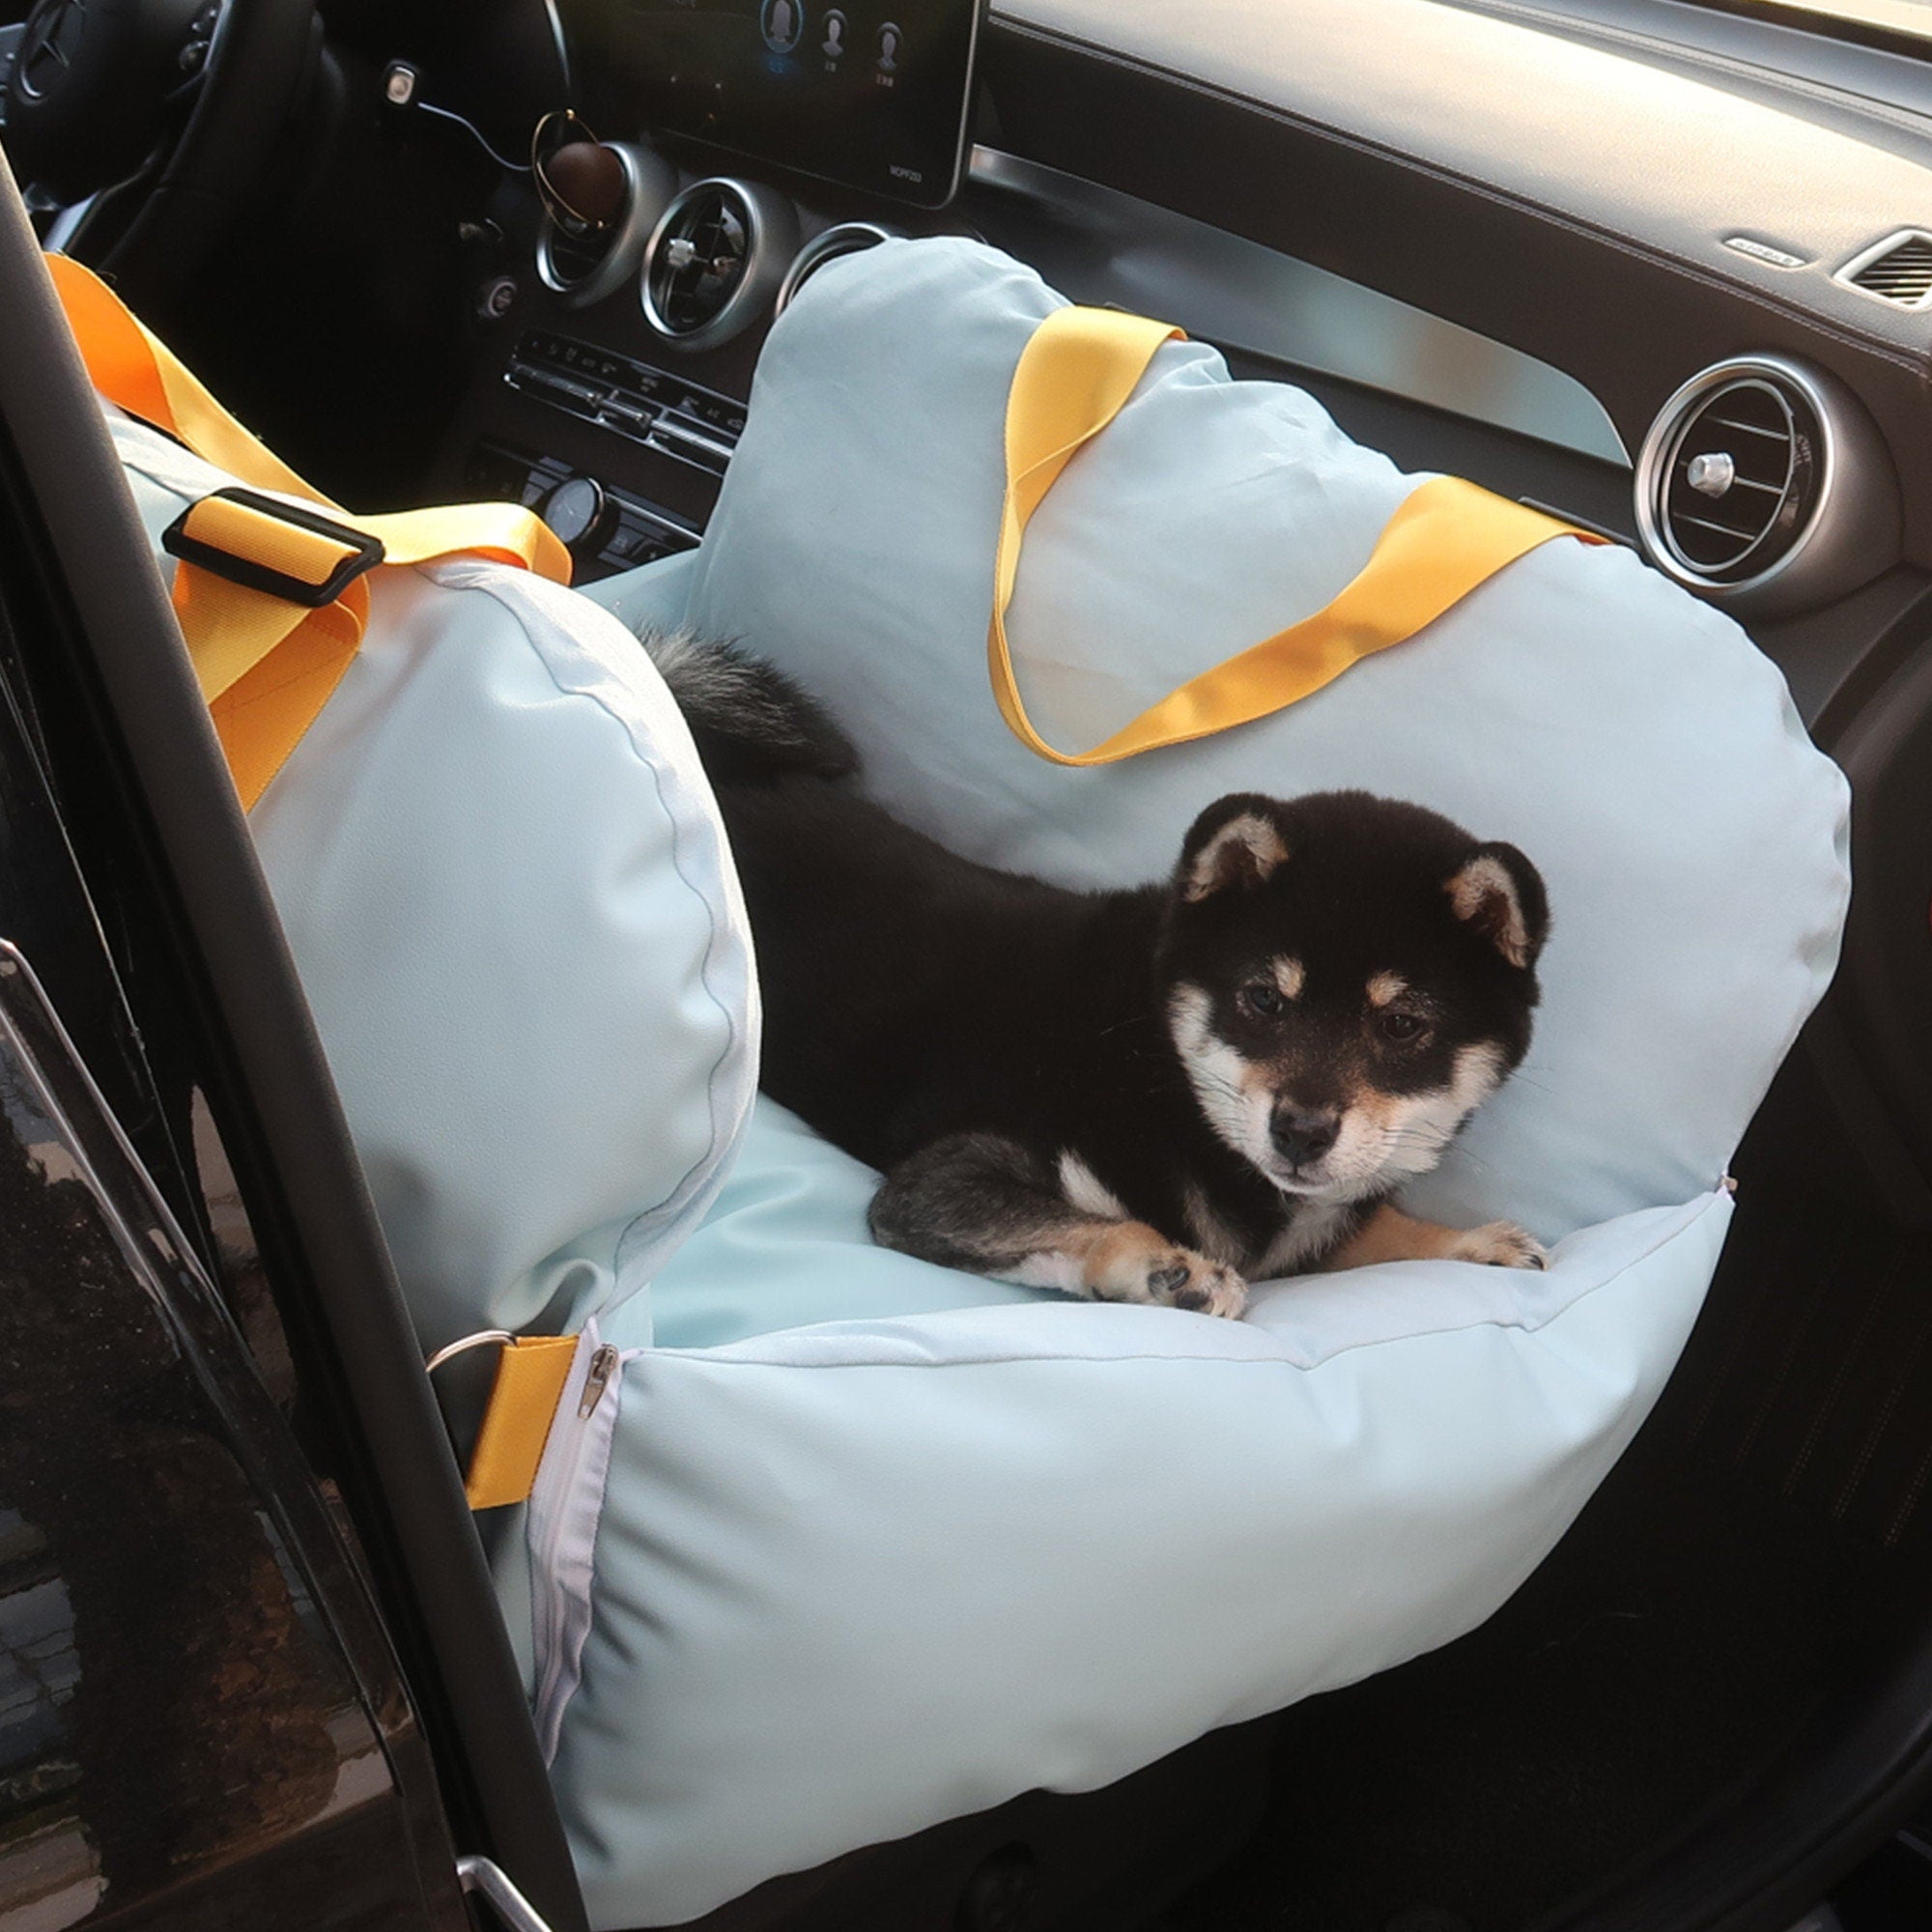 Kashima Kawana PU leather Pet Car Seat